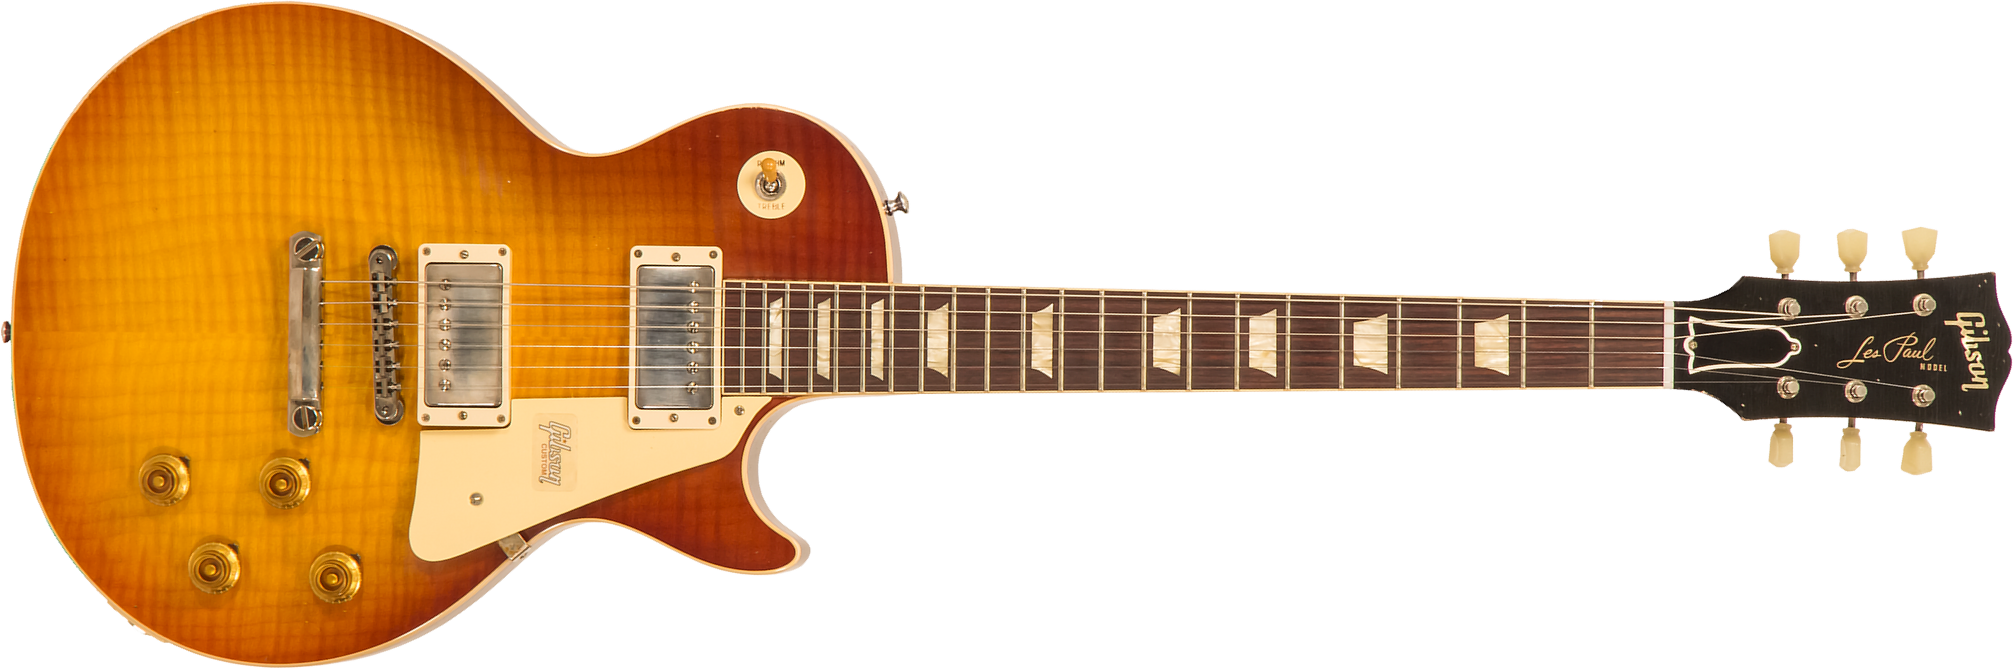 Gibson Custom Shop M2m Les Paul Standard 1959 60th Anniversary 2h Ht Rw #993516 - Vos Royal Teaburst - Enkel gesneden elektrische gitaar - Main pictur